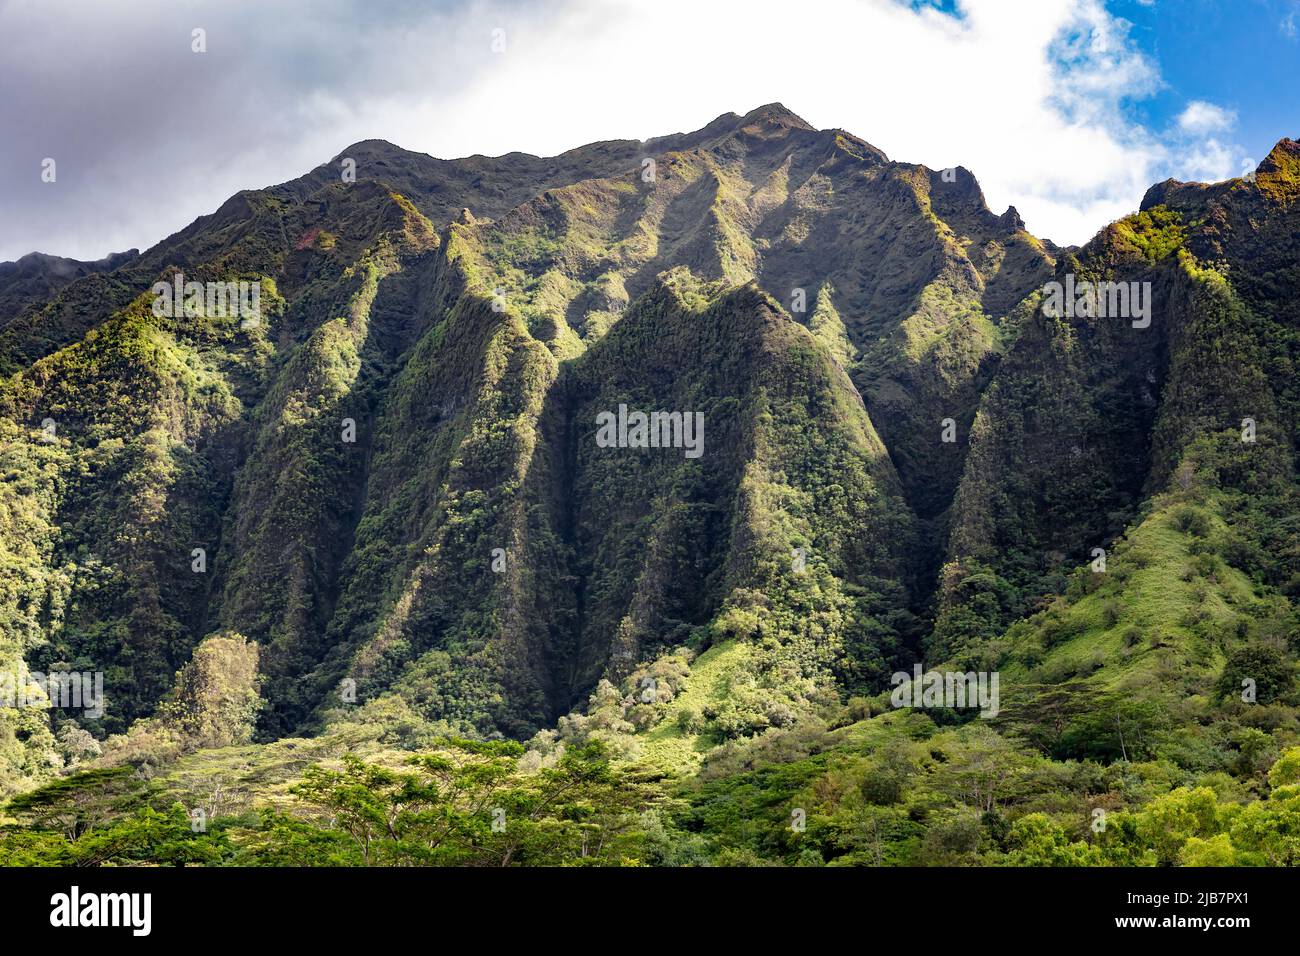 Views of the steep volcanic mountains of Oahu from Ho’omaluhia Botanical Garden, Hawaii Stock Photo